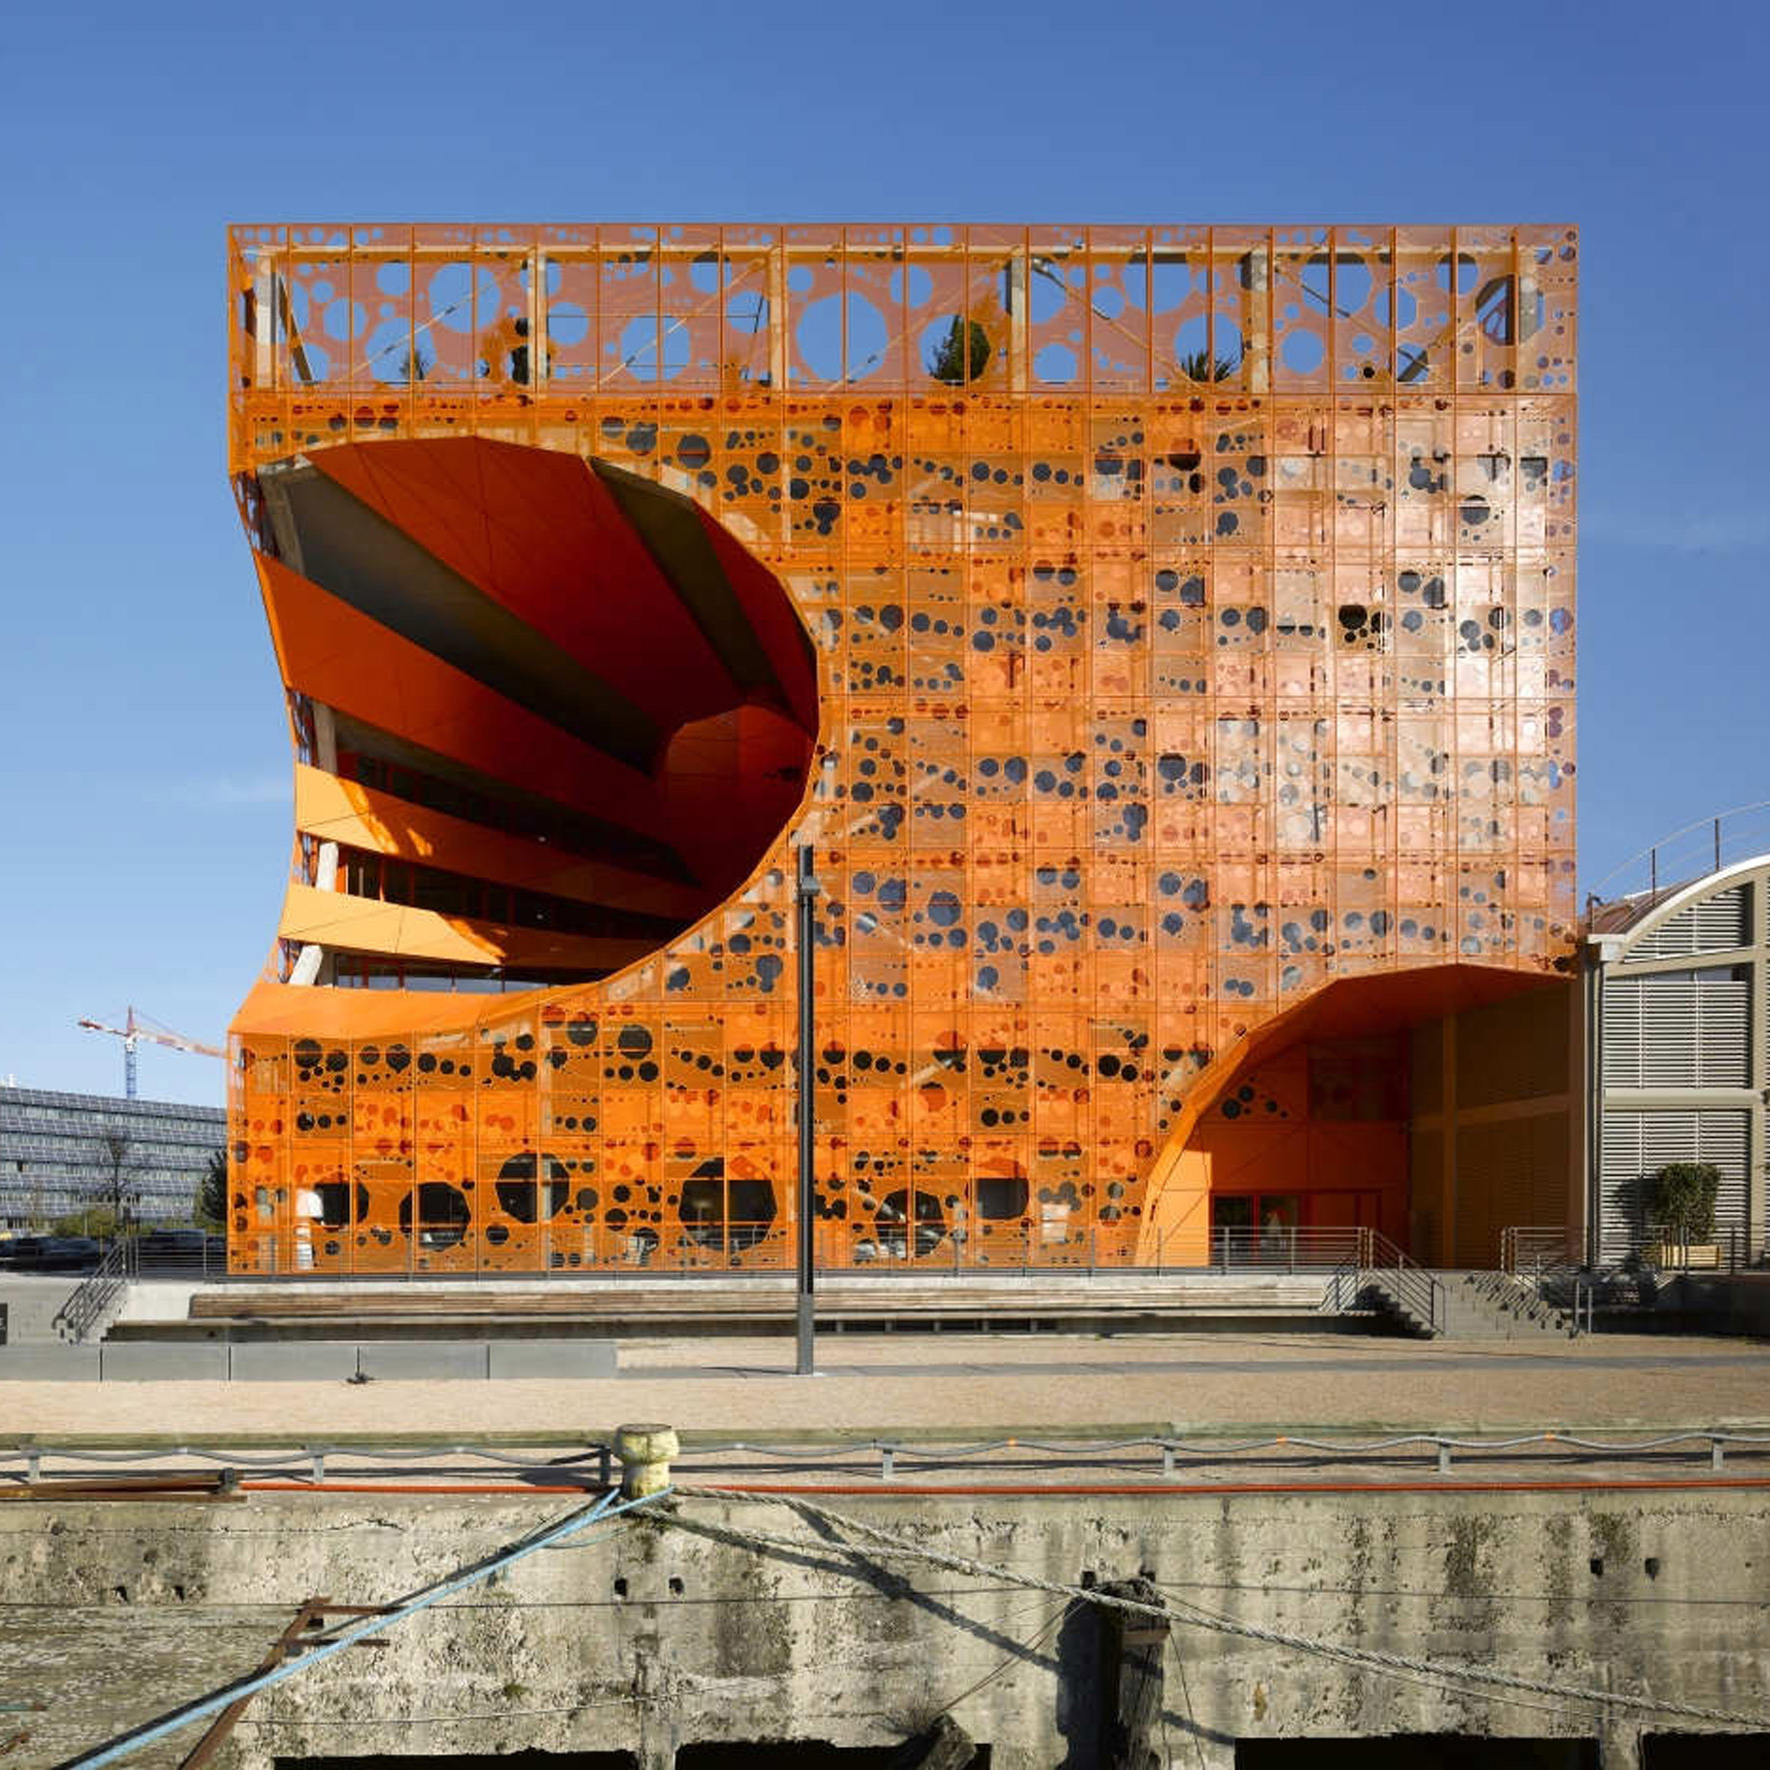 The Orange Cube by Jakob + Macfarlane